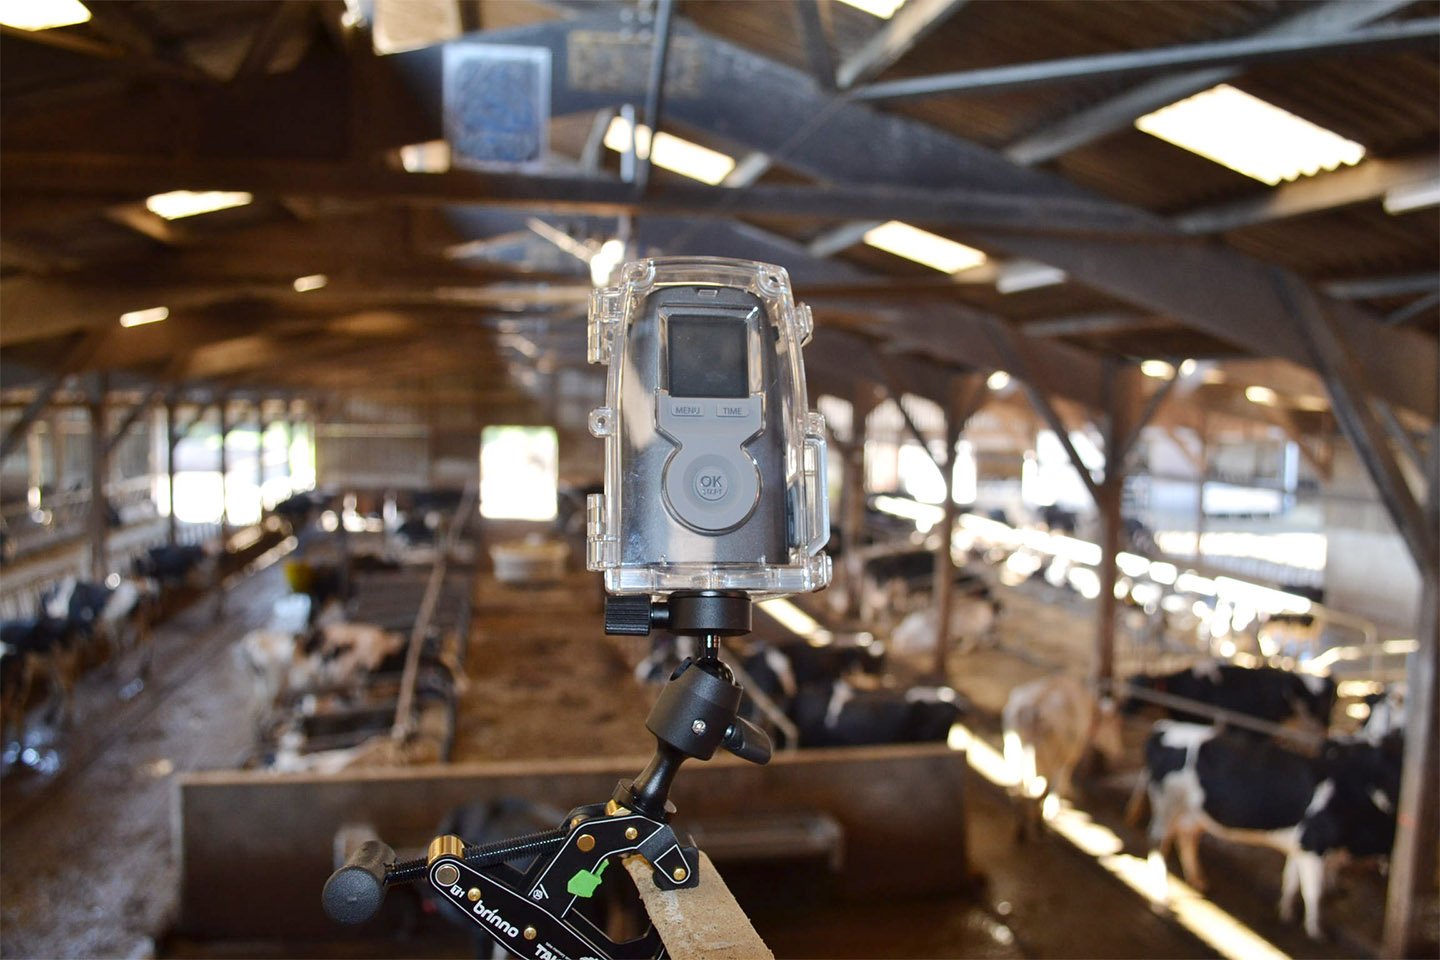  camera-surveillance-automatic-building-cattle